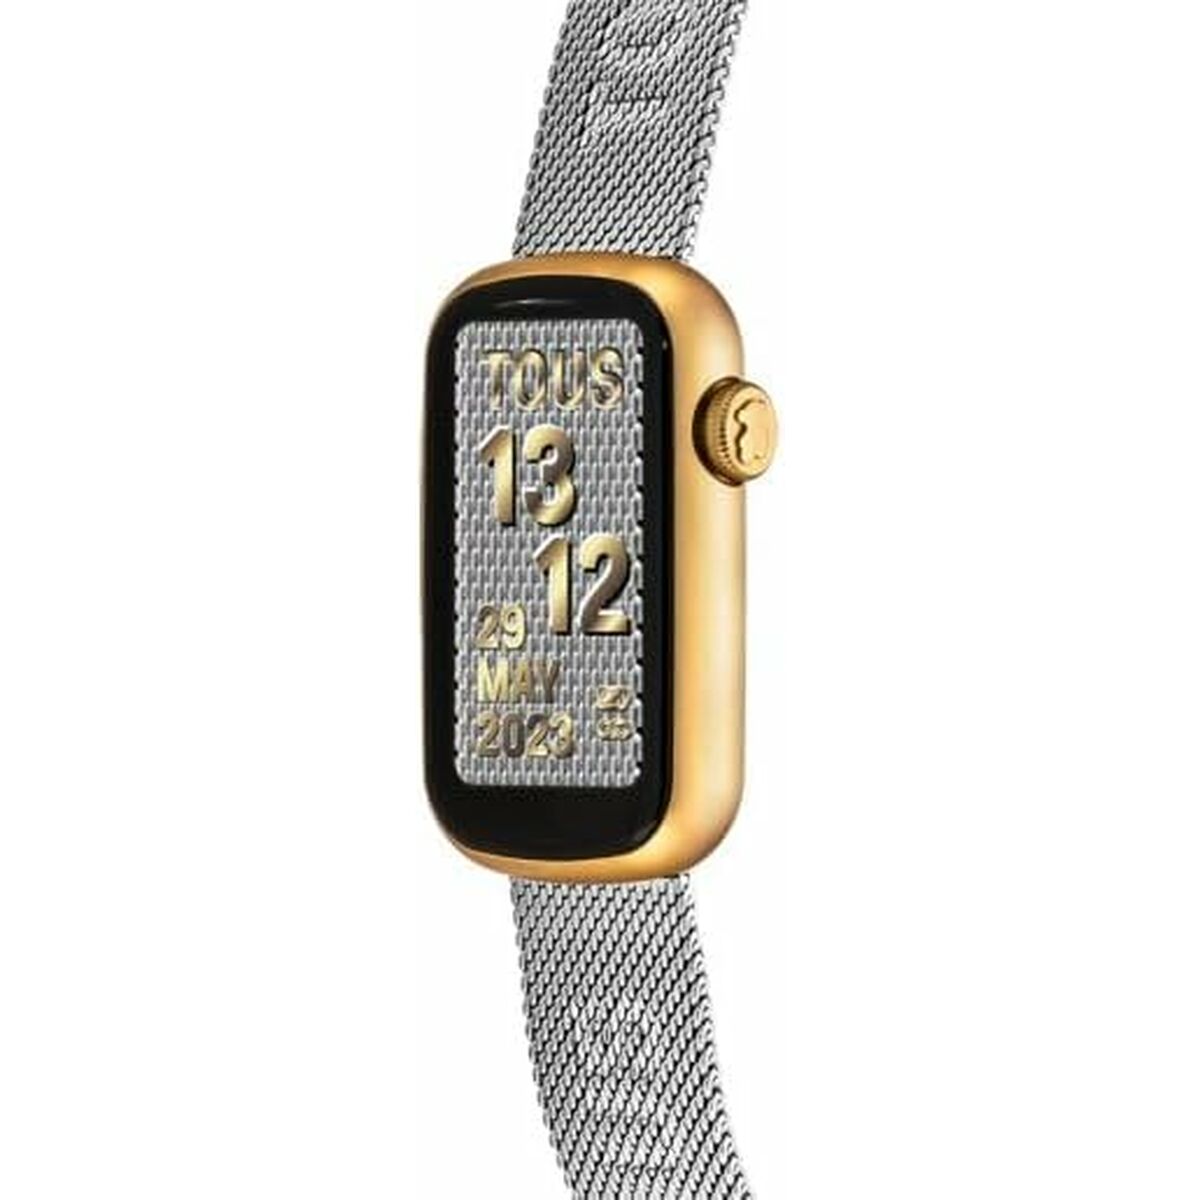 Kaufe Smartwatch Tous 3000132600 bei AWK Flagship um € 218.00